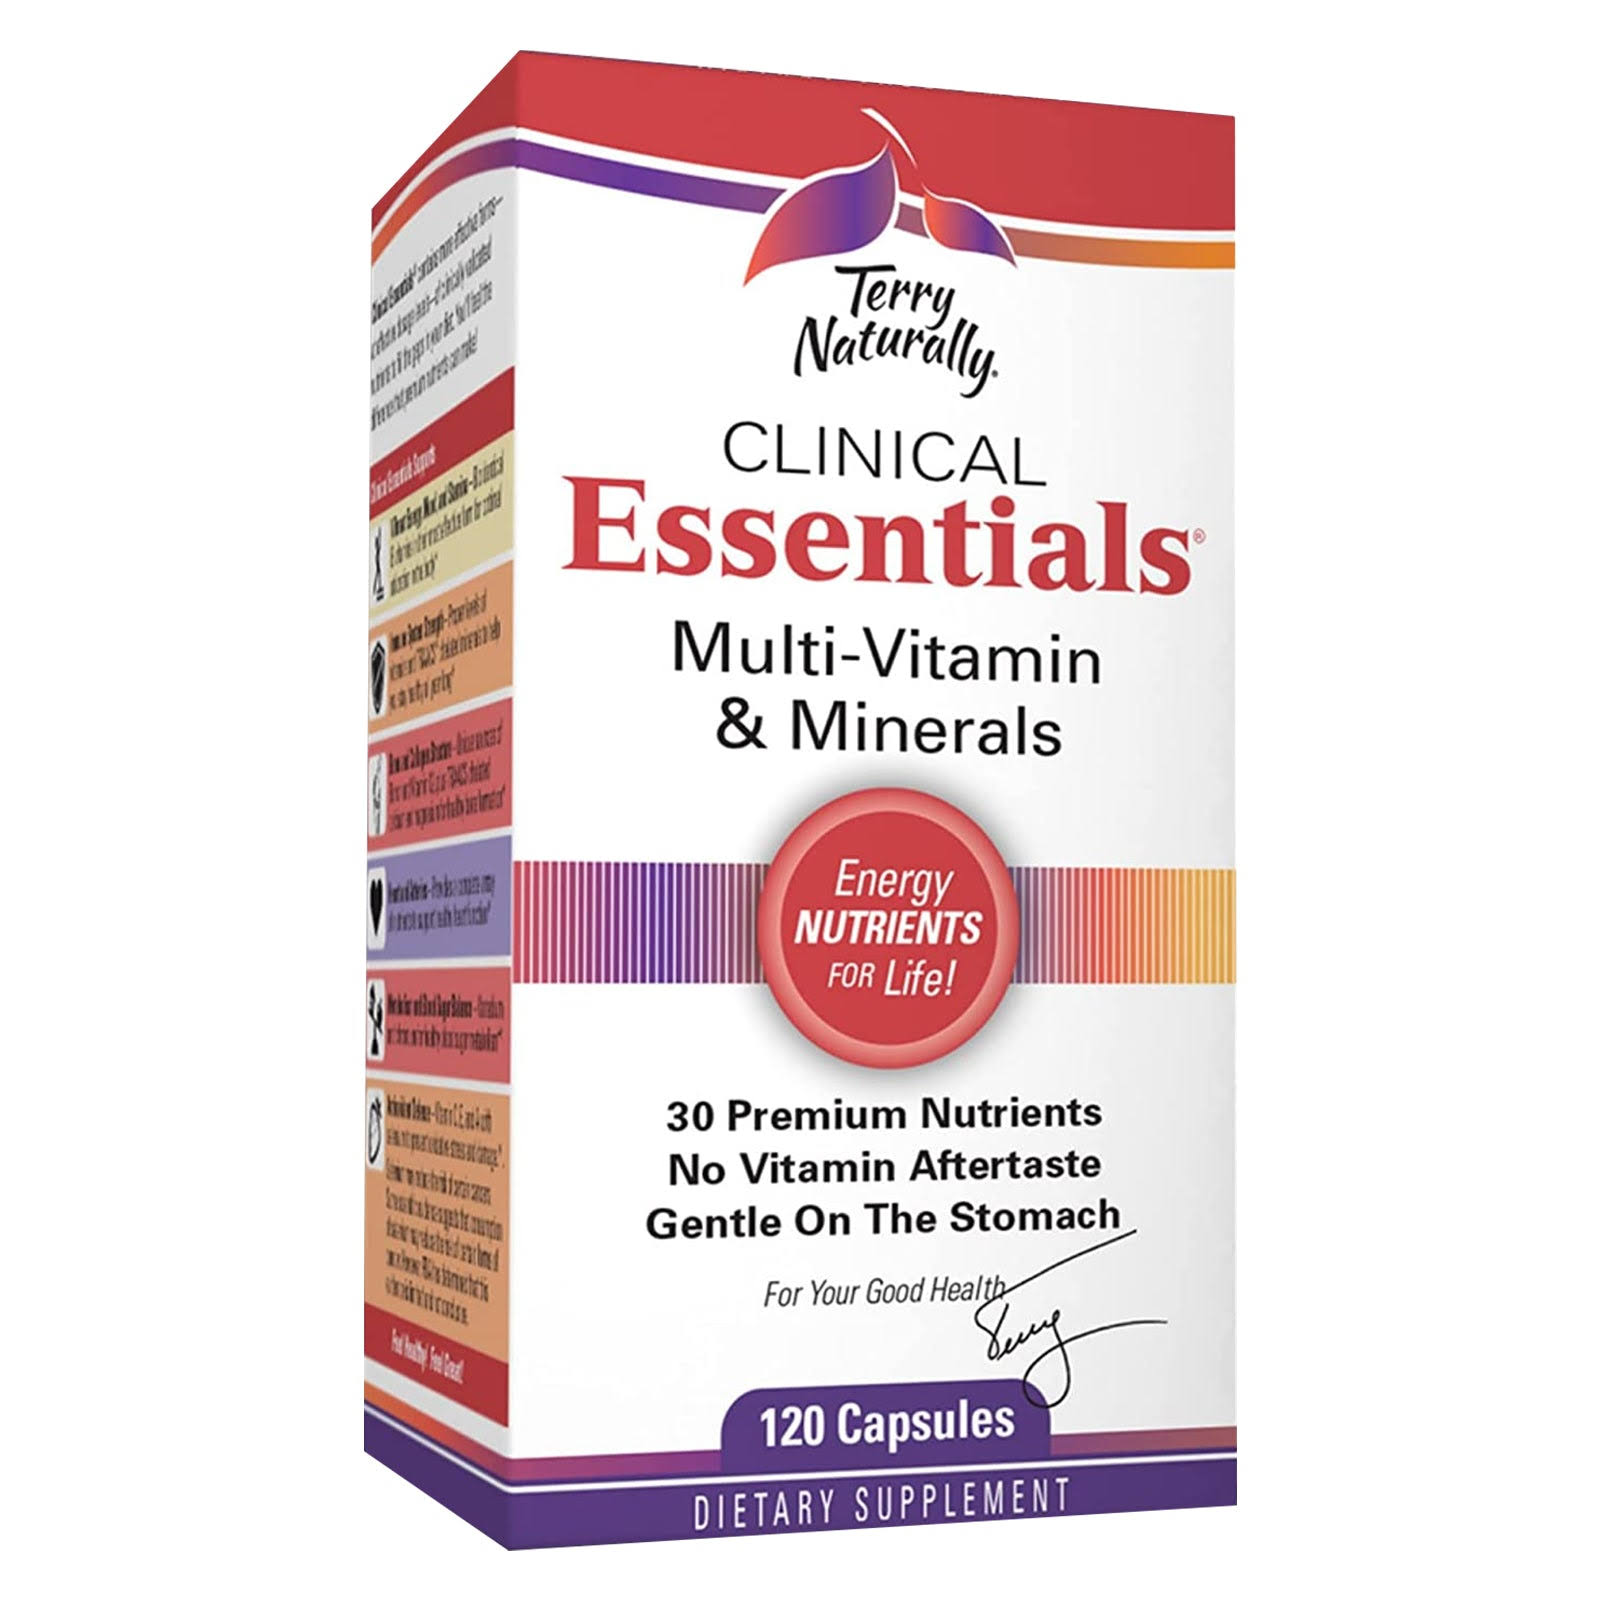 Terry Naturally Clinical Essentials Multi-Vitamin & Minerals 120 Caps